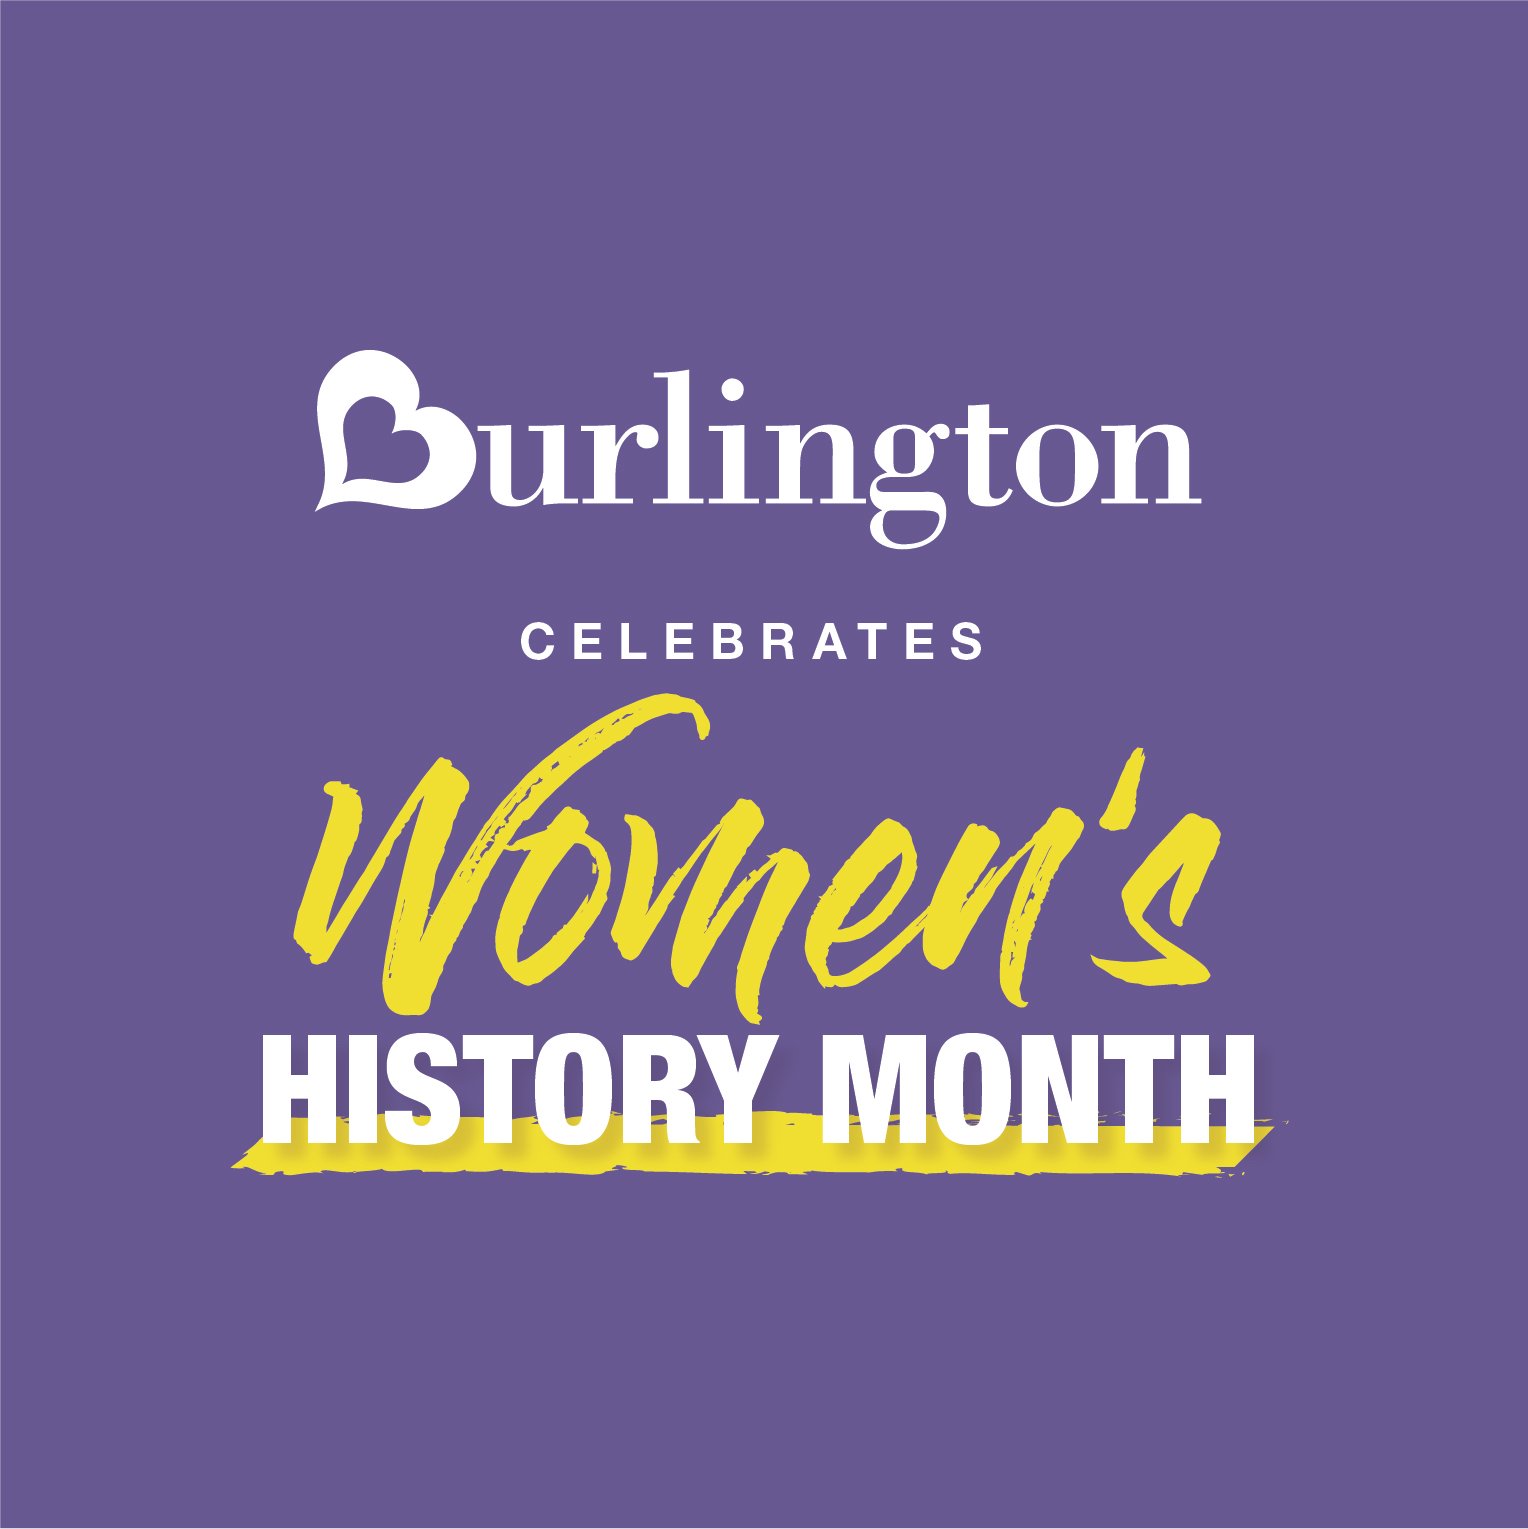 Why Burlington : Burlington Celebrates womens history month